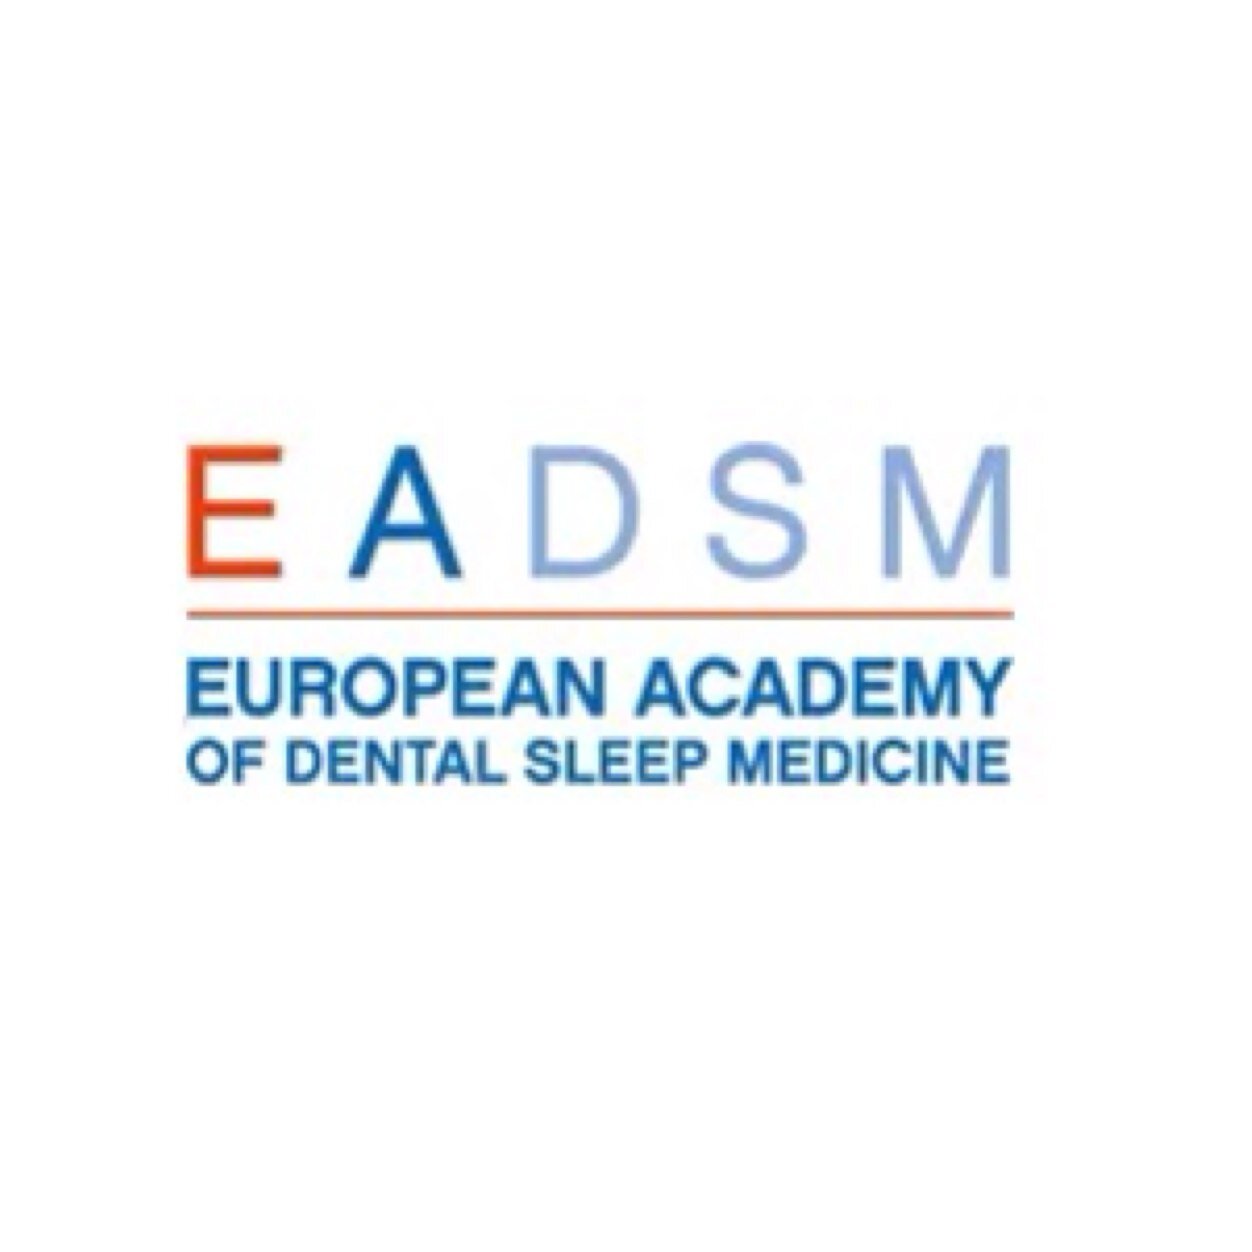 European Academy of Dental Sleep Medicine